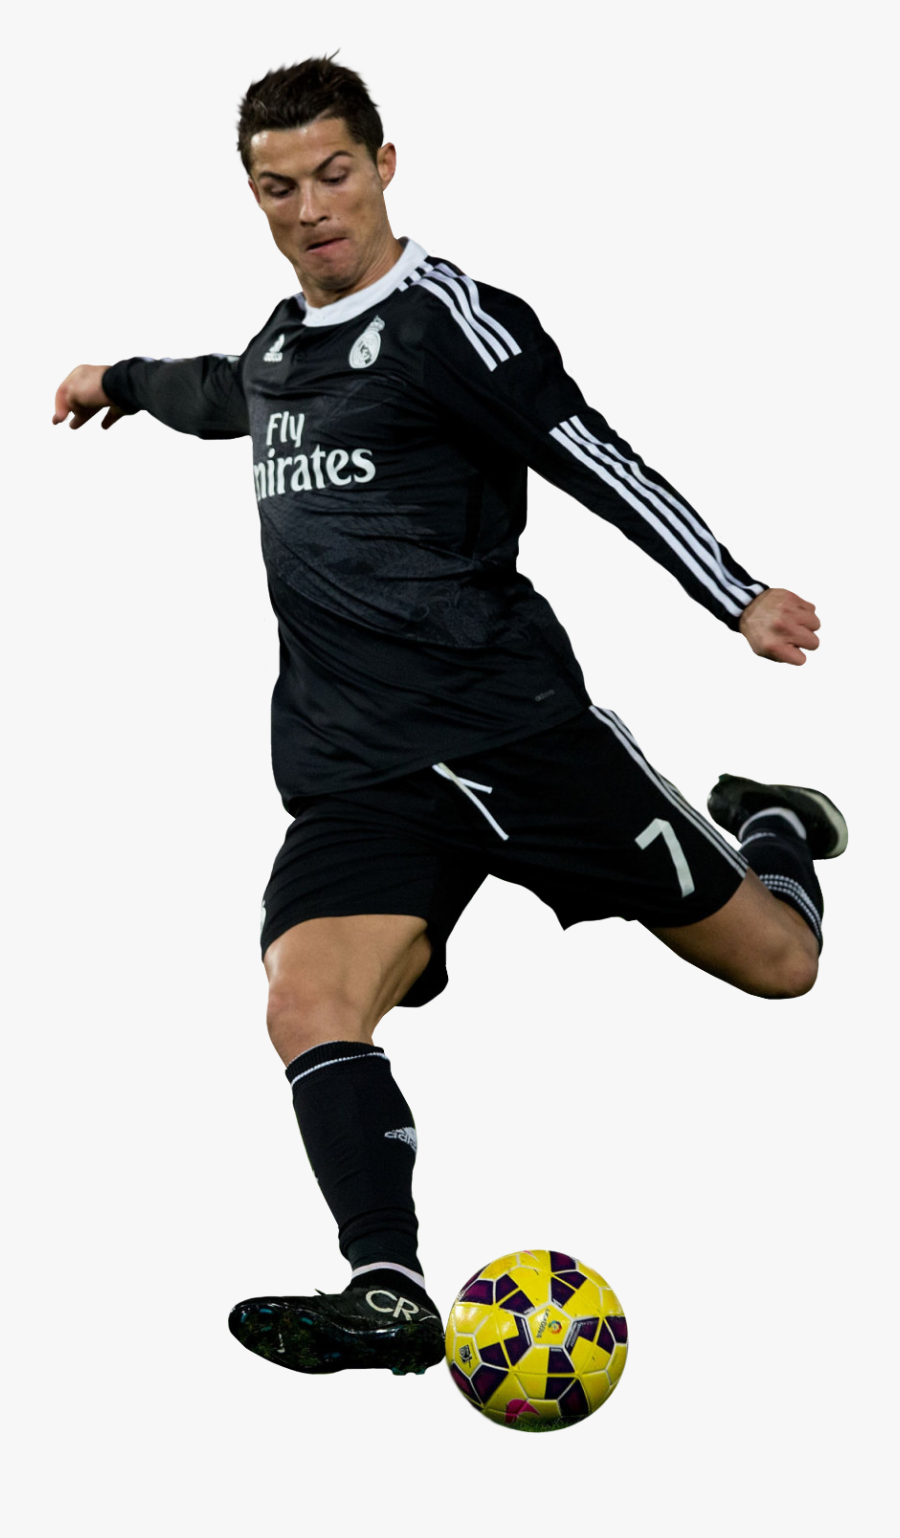 Real Cristiano Portugal Madrid Ronaldo Football Player - Ronaldo Png, Transparent Clipart